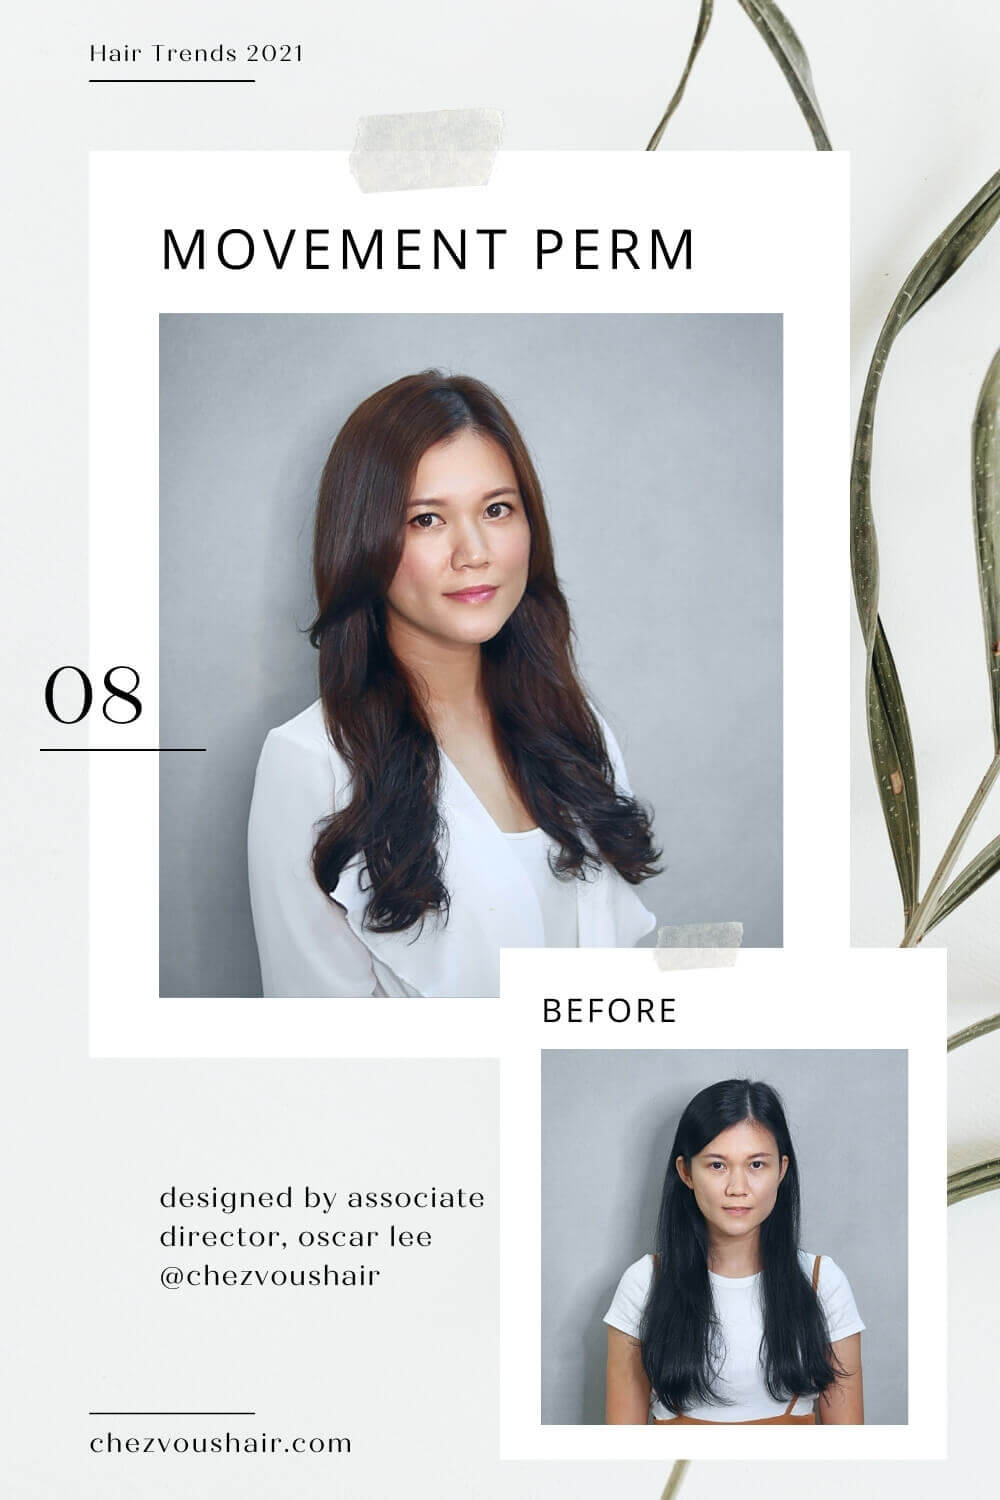 Hair Trends 2021: Movement Perm